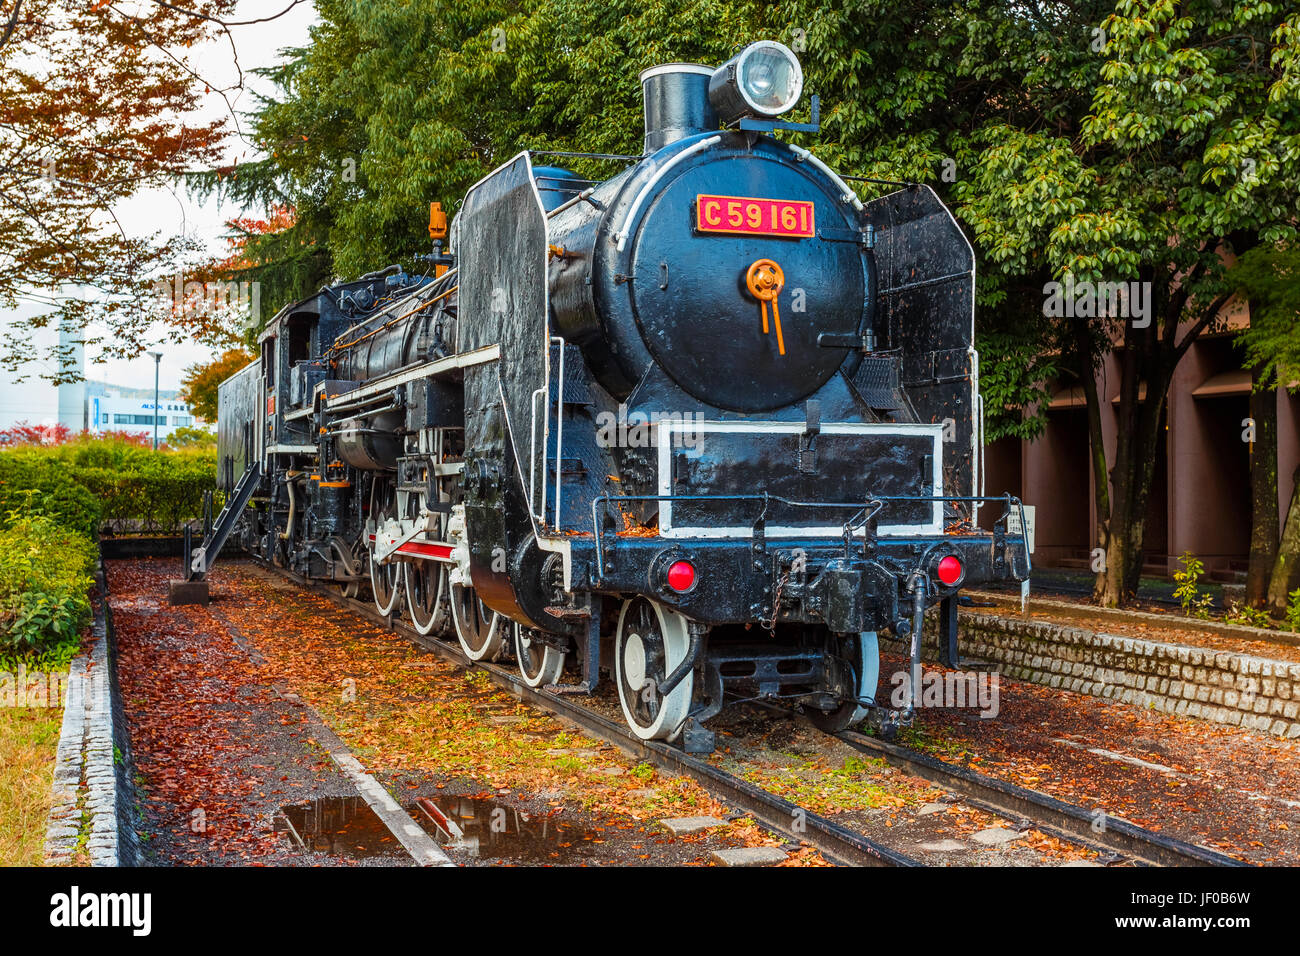 A Steam locomotive at Hiroshima Children's Museum in Hiroshima, Japan Stock Photo